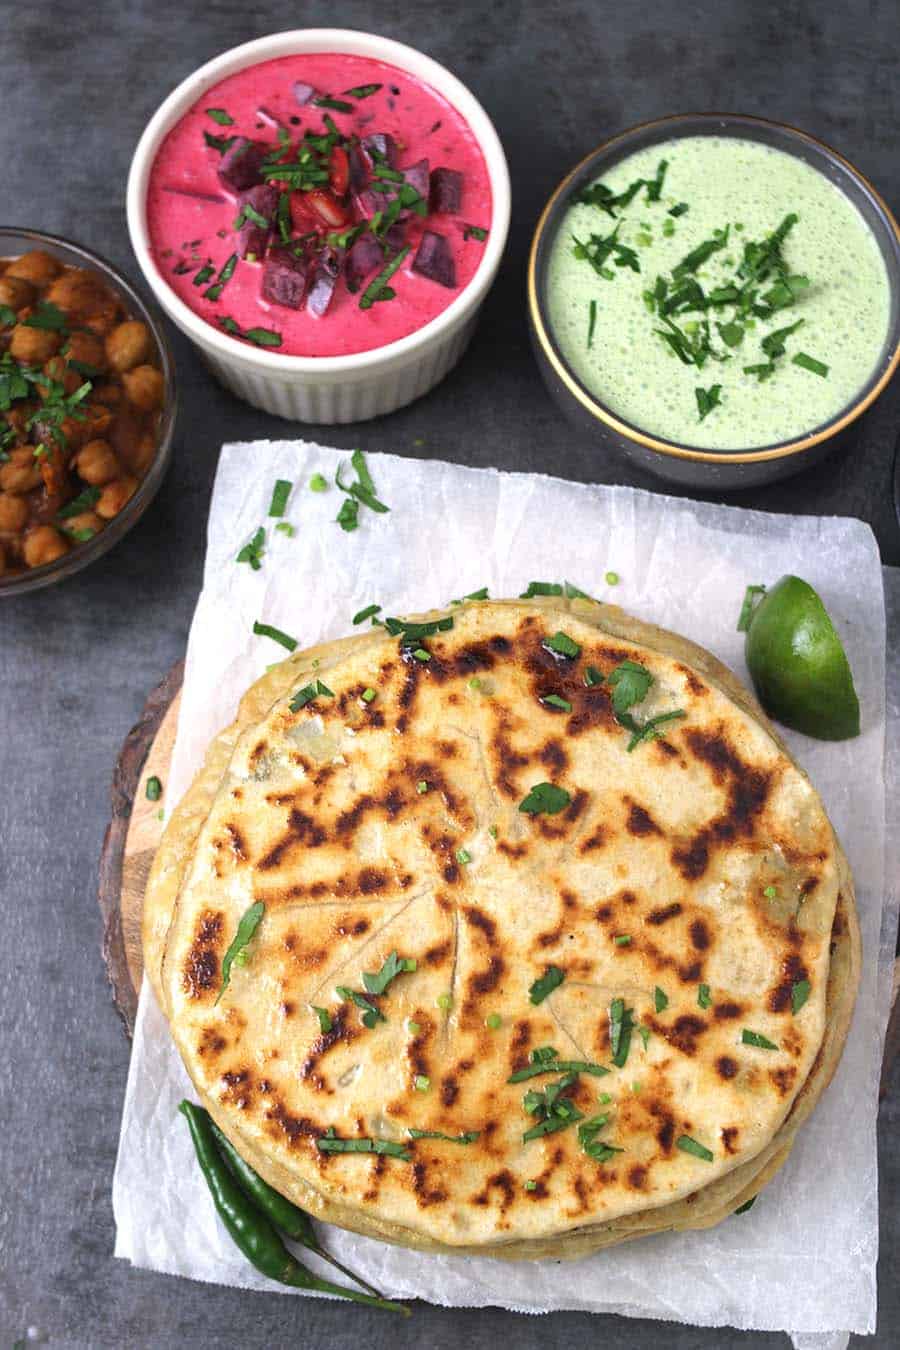 Aloo Paratha, How to make Paratha, Aloo naan, Indian flatbread recipes, vegan and vegetarian breakfast, lunch, dinner recipes, malabar parotta, bread stuffing, dhaba style, restaurant style, punjabi paratha, leftover mashed potato recipes, no yeast flatbread, #naan #roti #paratha, paratha wala, parauntha, paronthi, parotta, porotta